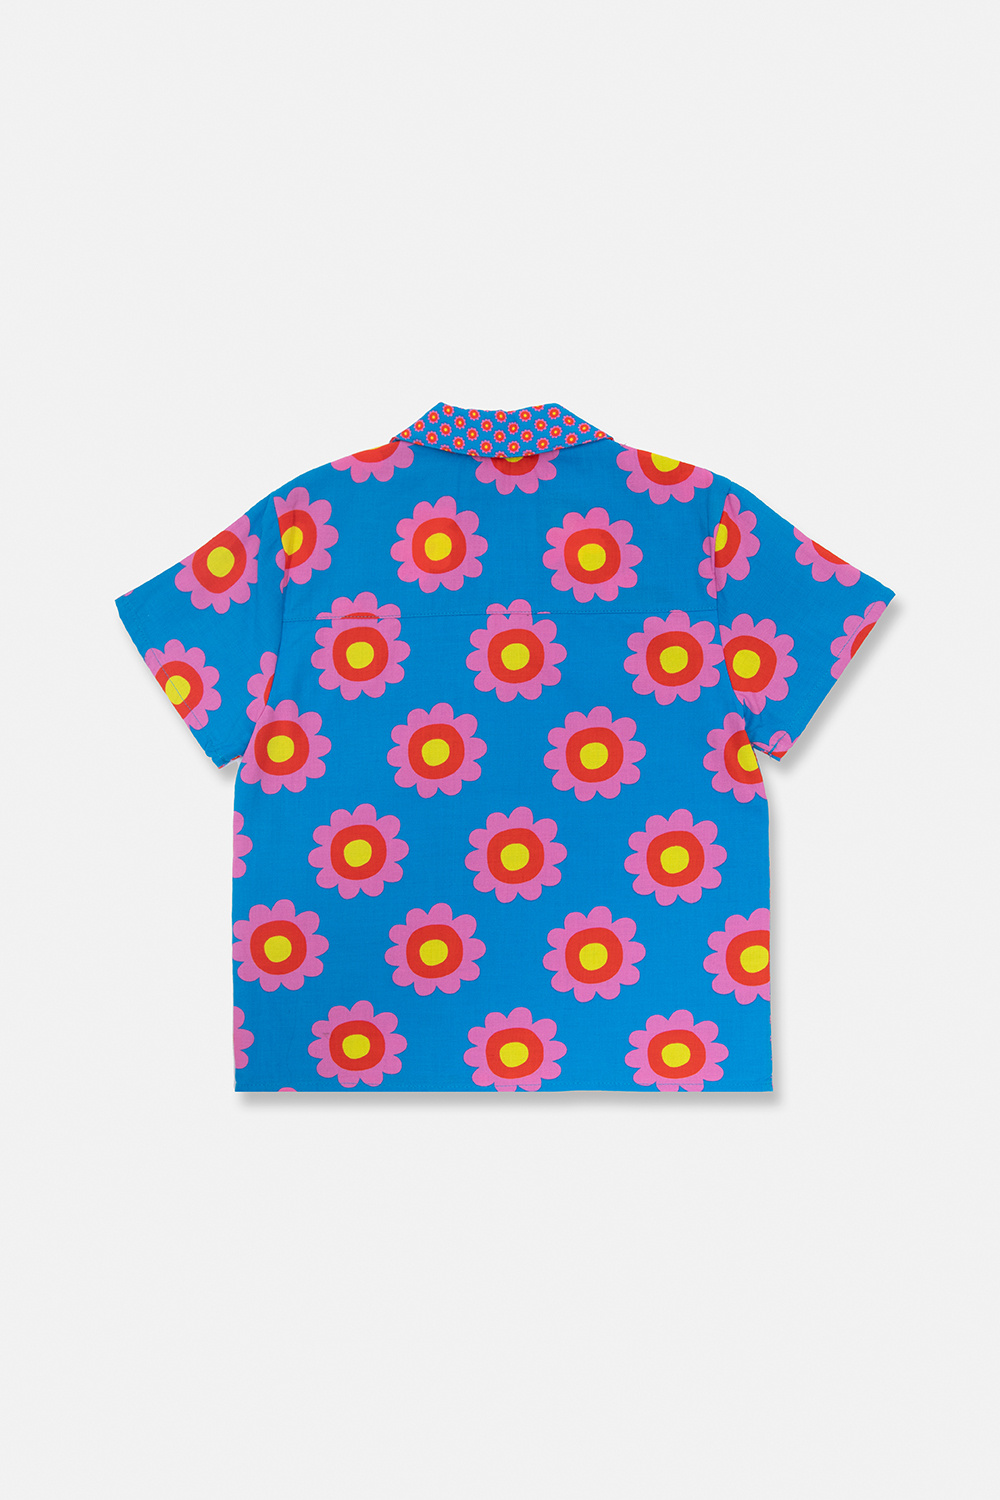 stella buty McCartney Kids Floral shirt